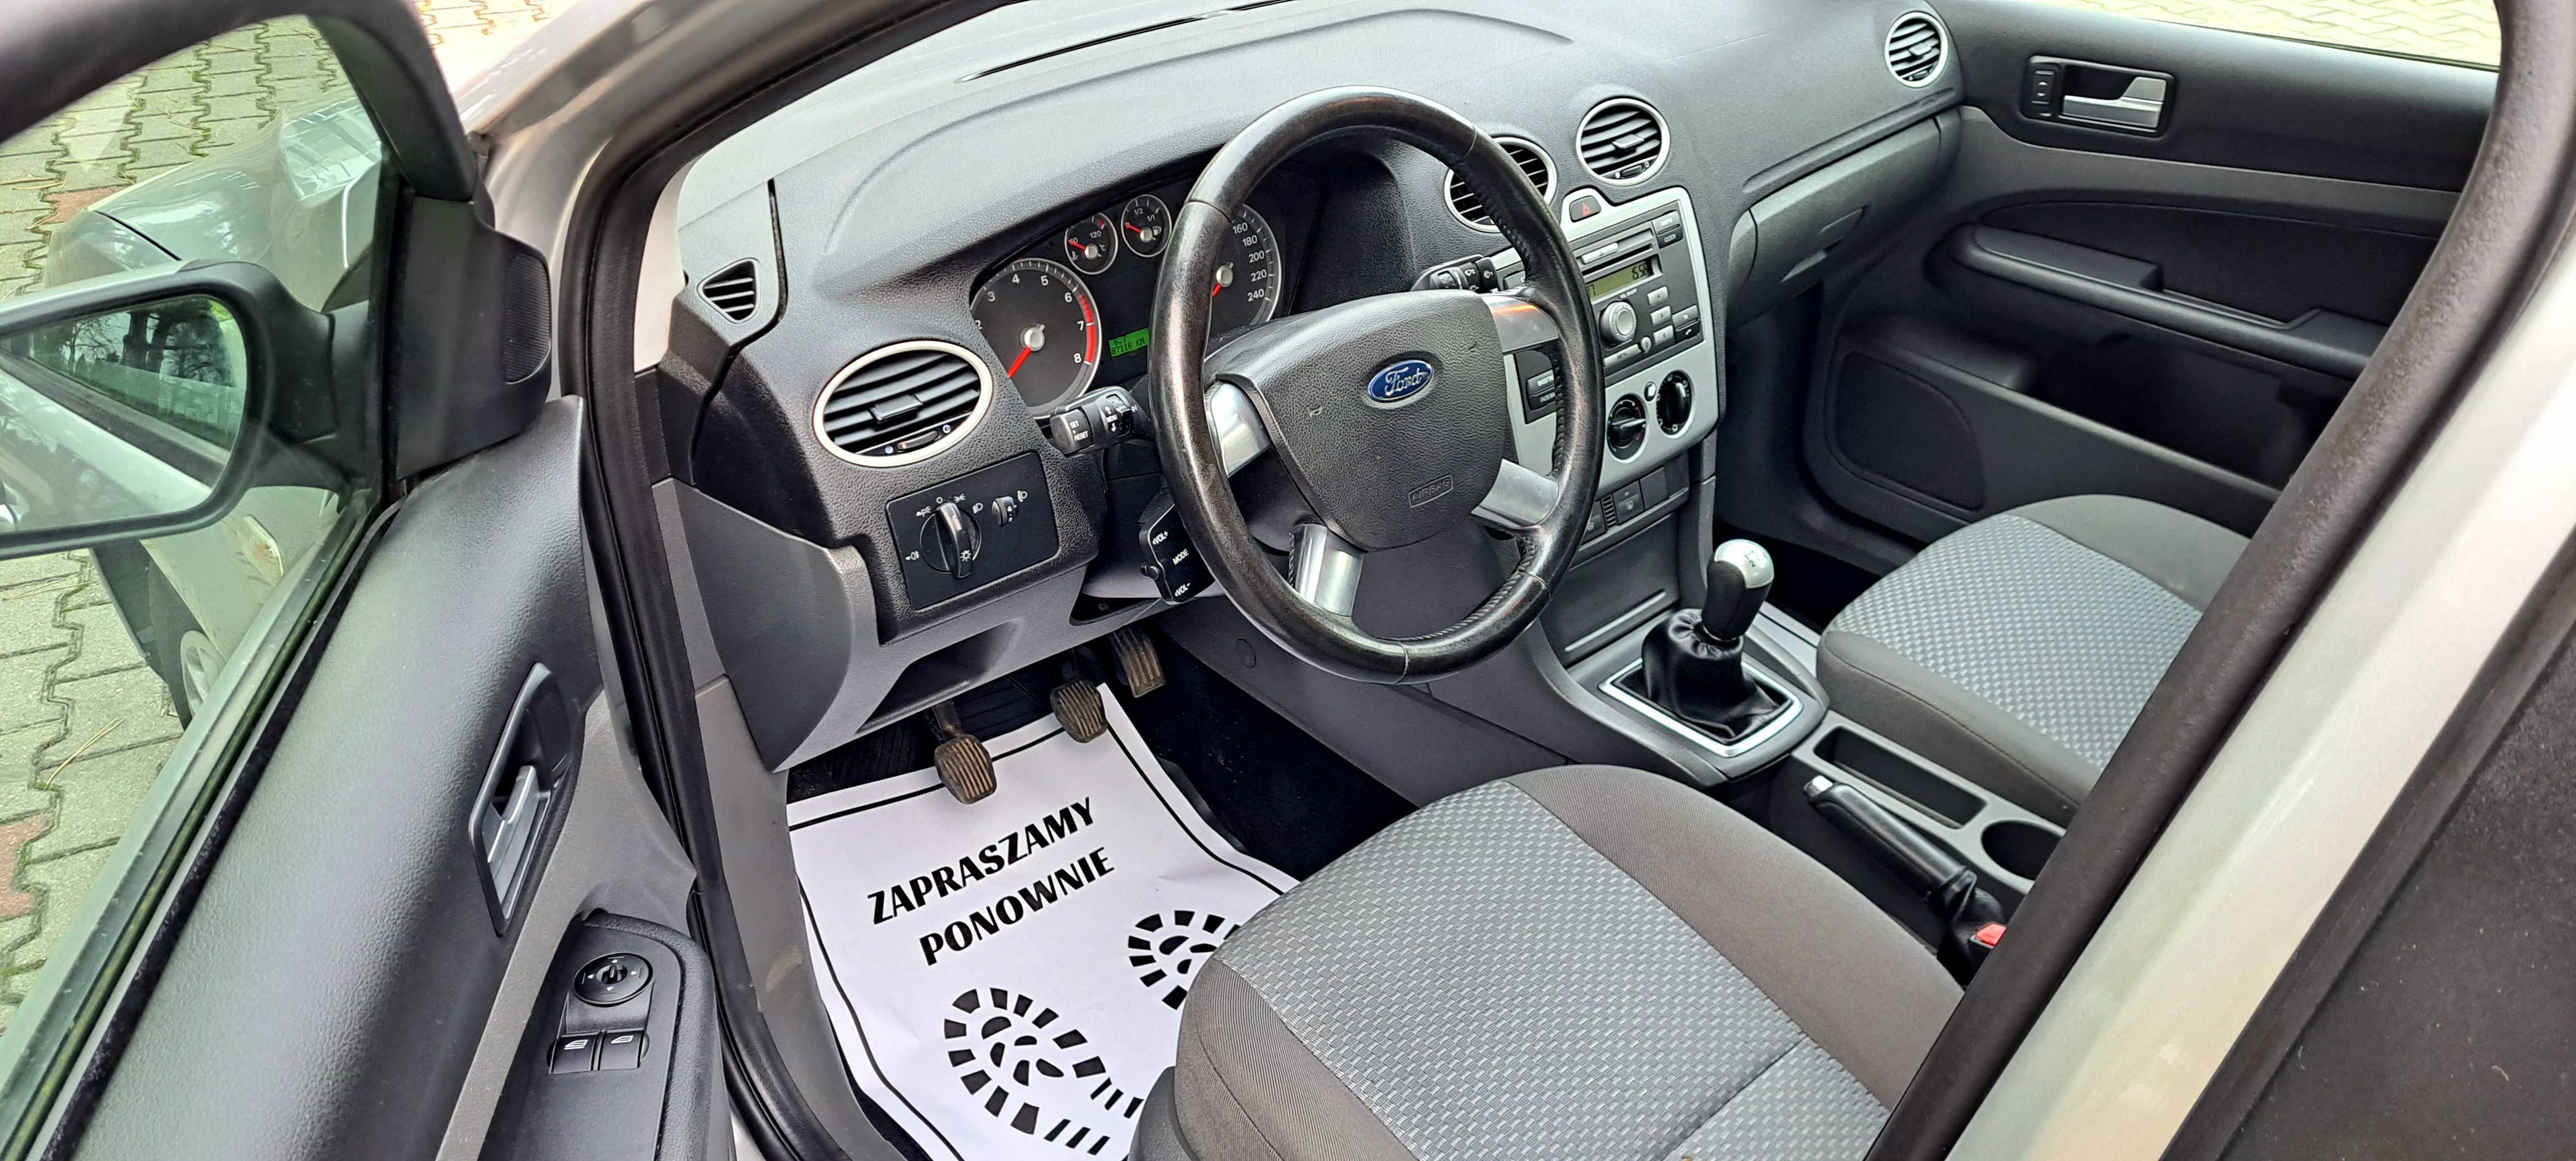 FORD FOCUS 1.6 Benz Klima ABS ESP grzana szyba SuPeR StAn!!!